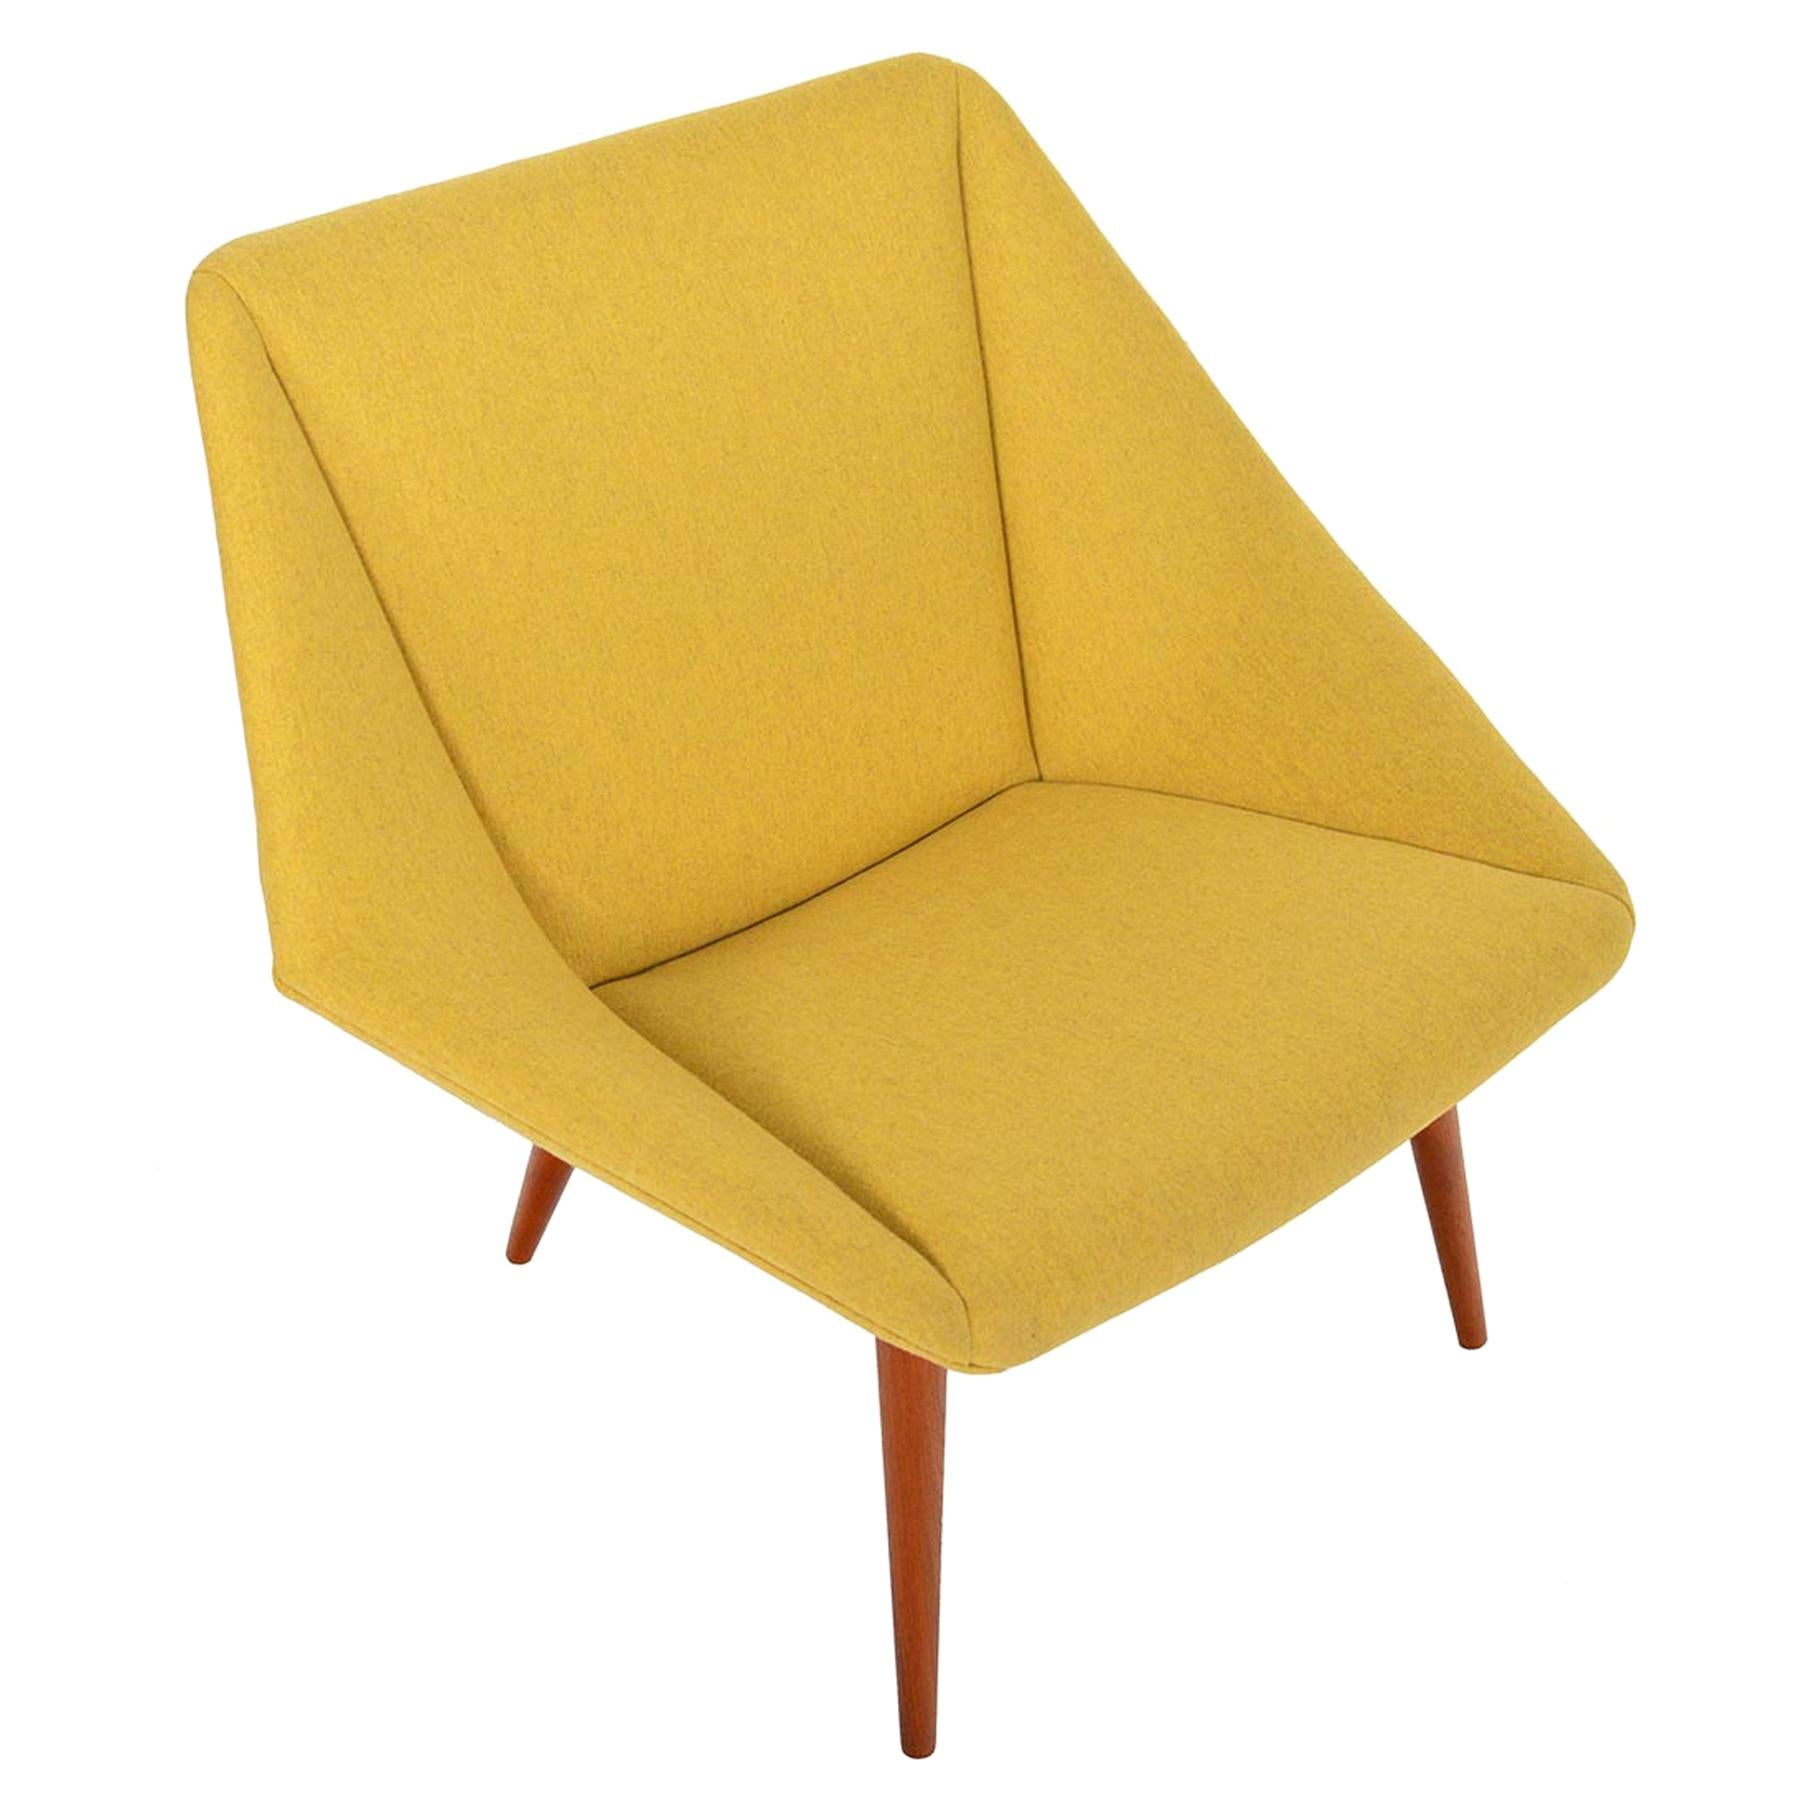 Nanna Ditzel Model 93 Tux Lounge Chair in Goldenrod